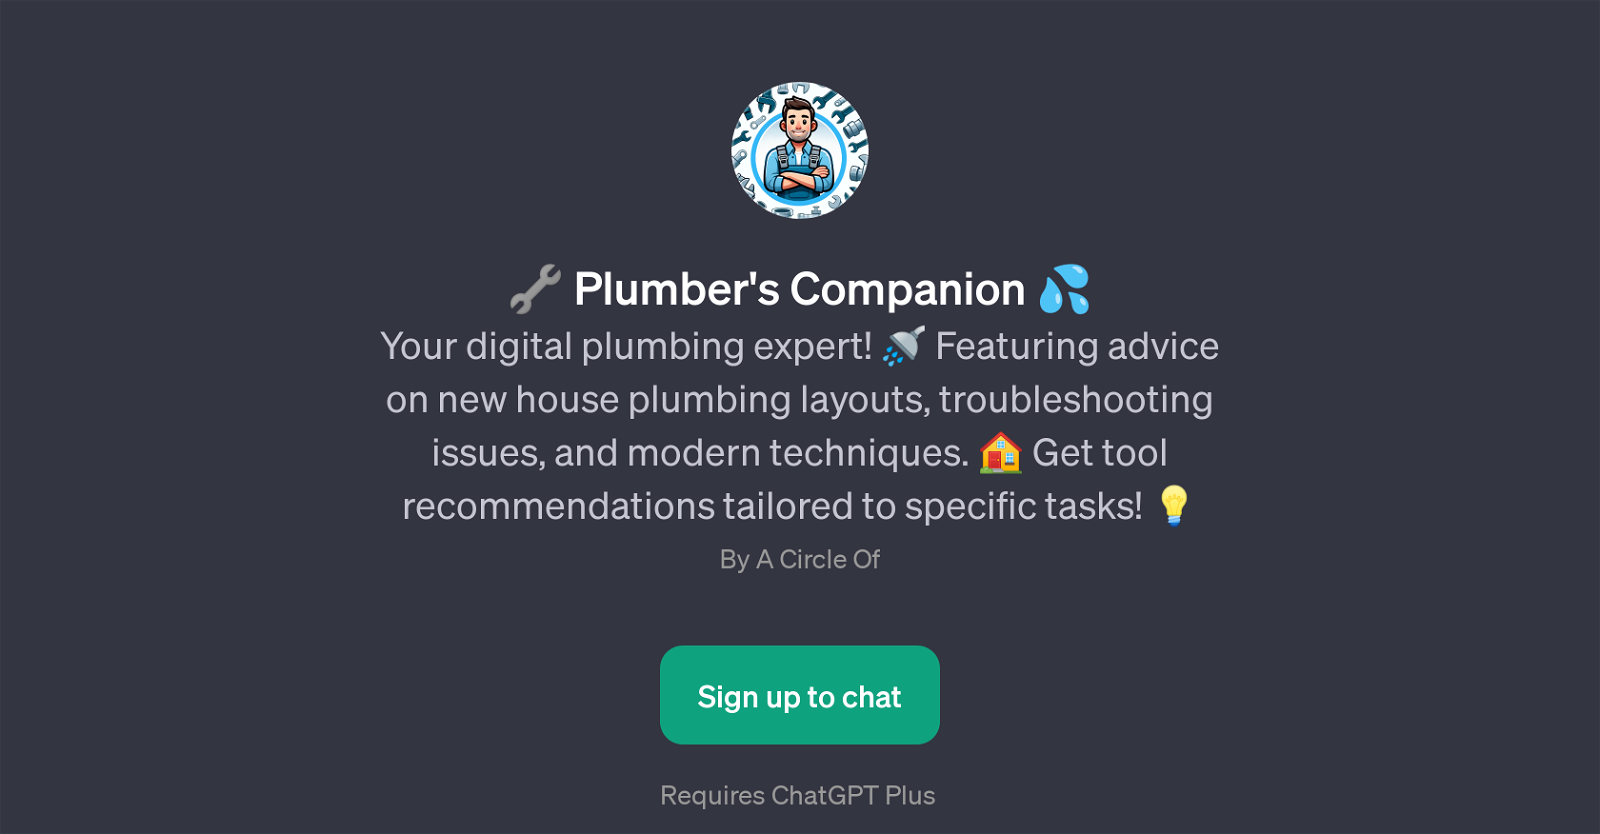 Plumber's Companion website